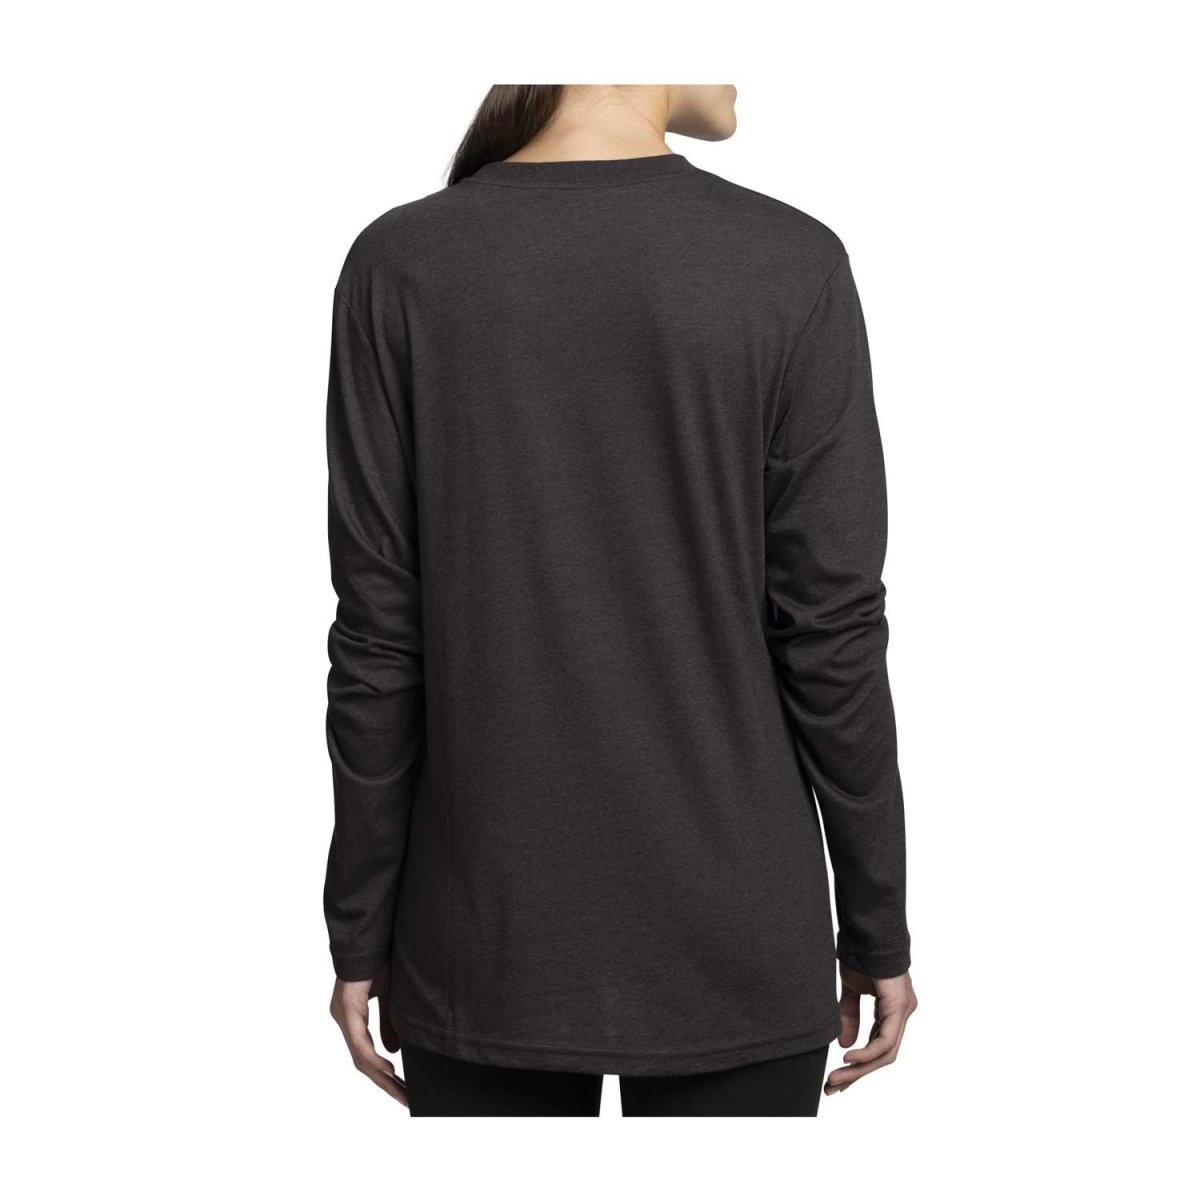 EVO9X Store Baggataway Shirt - Black Medium